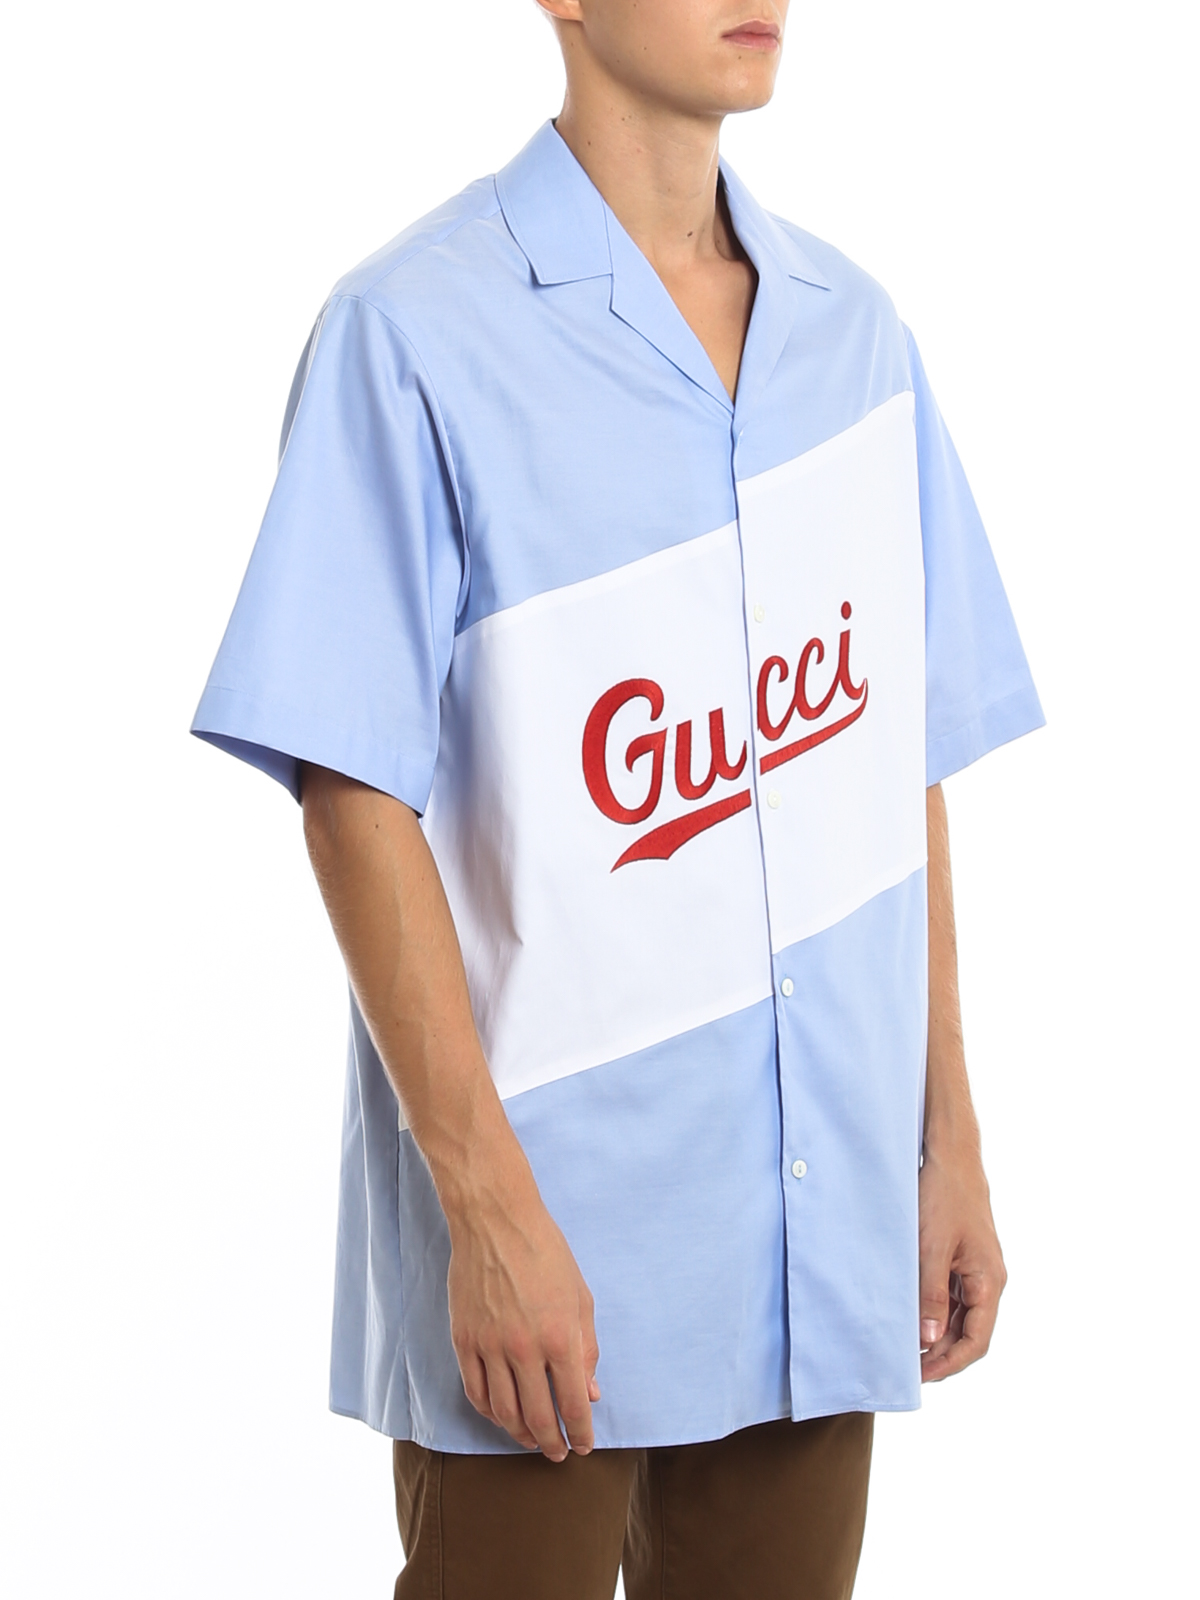 gucci shirts online